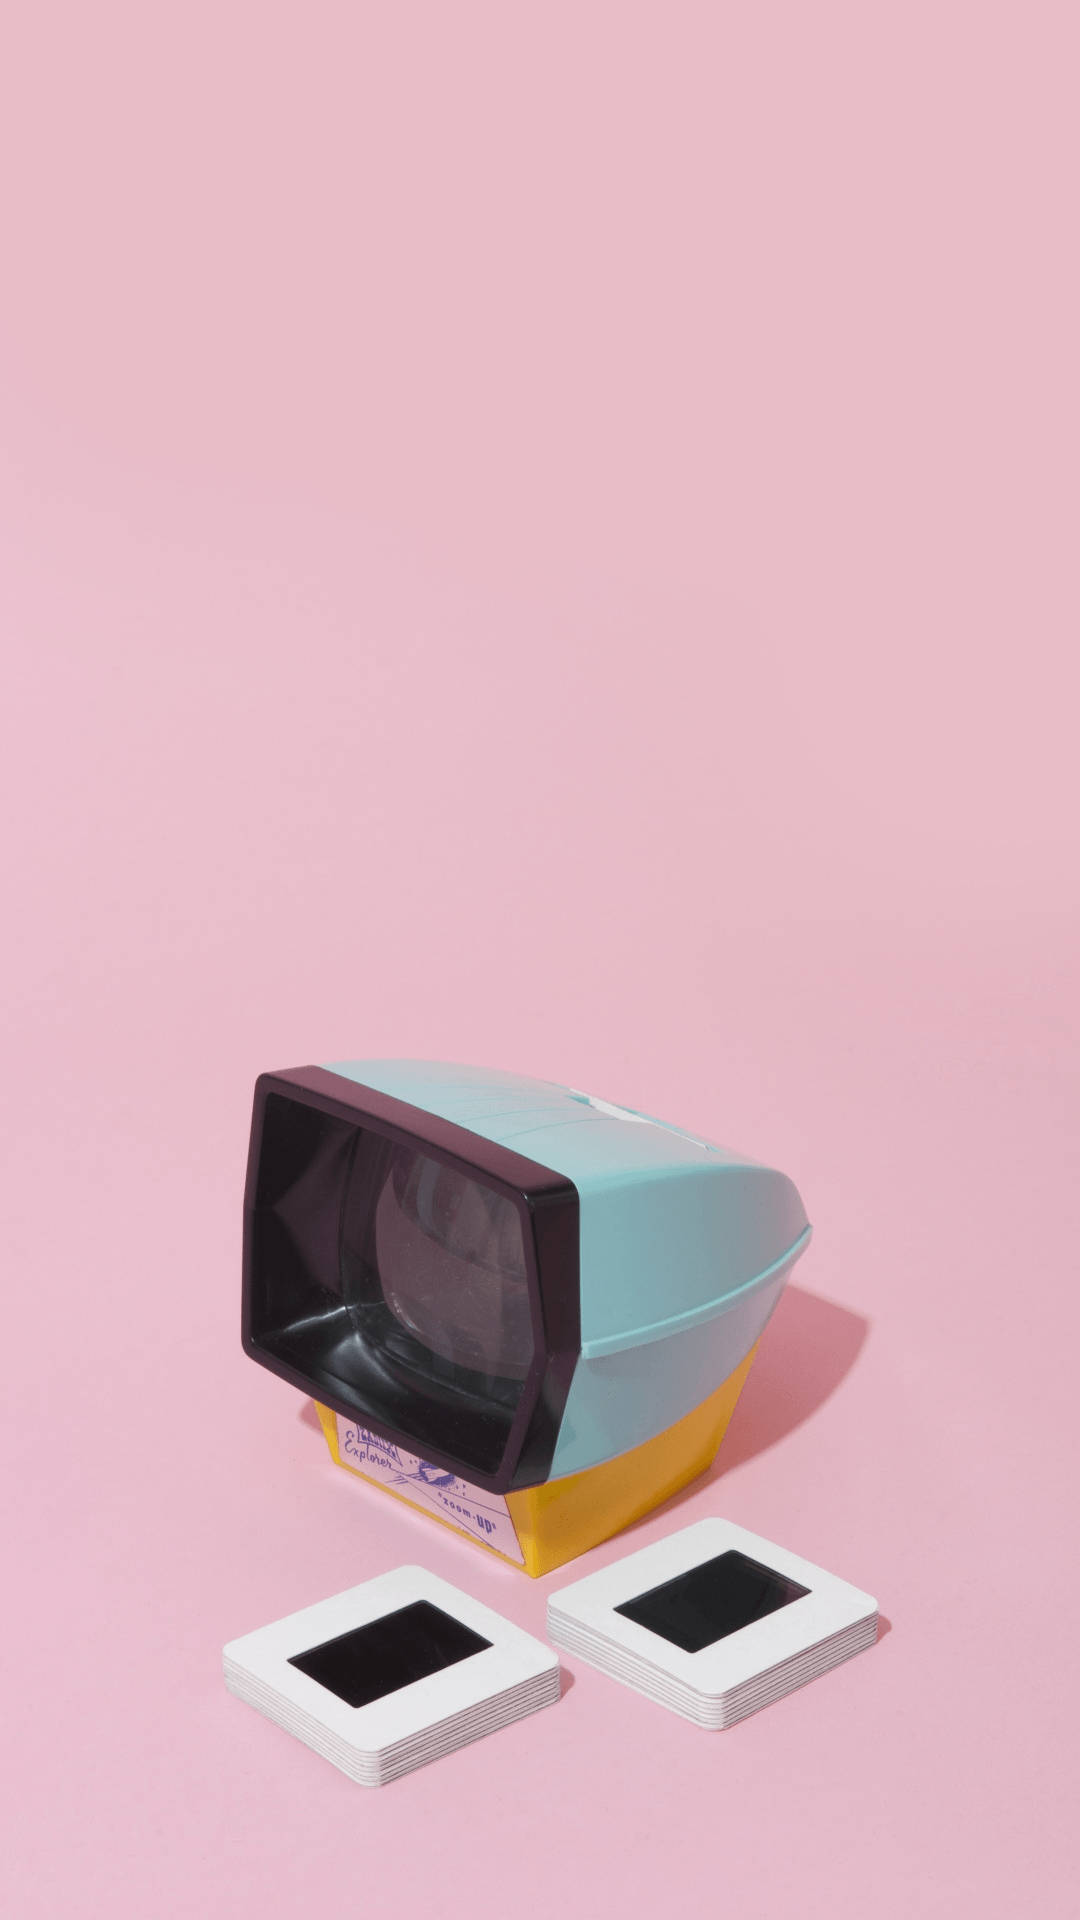 Aesthetic Retro Pastel Television Wallpaper